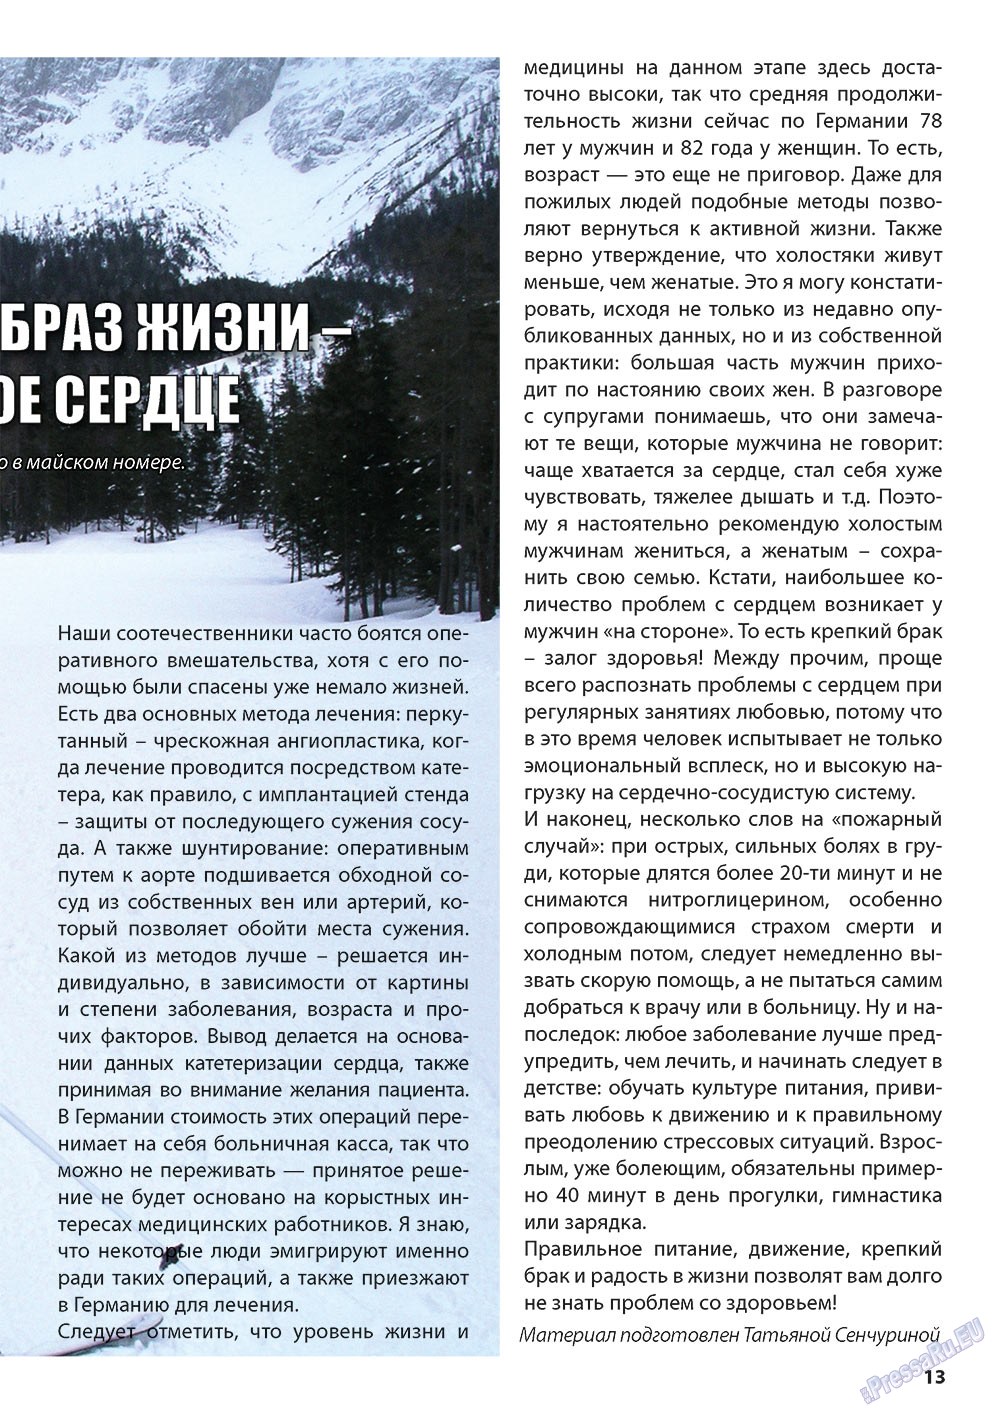 Wadim, журнал. 2012 №6 стр.13